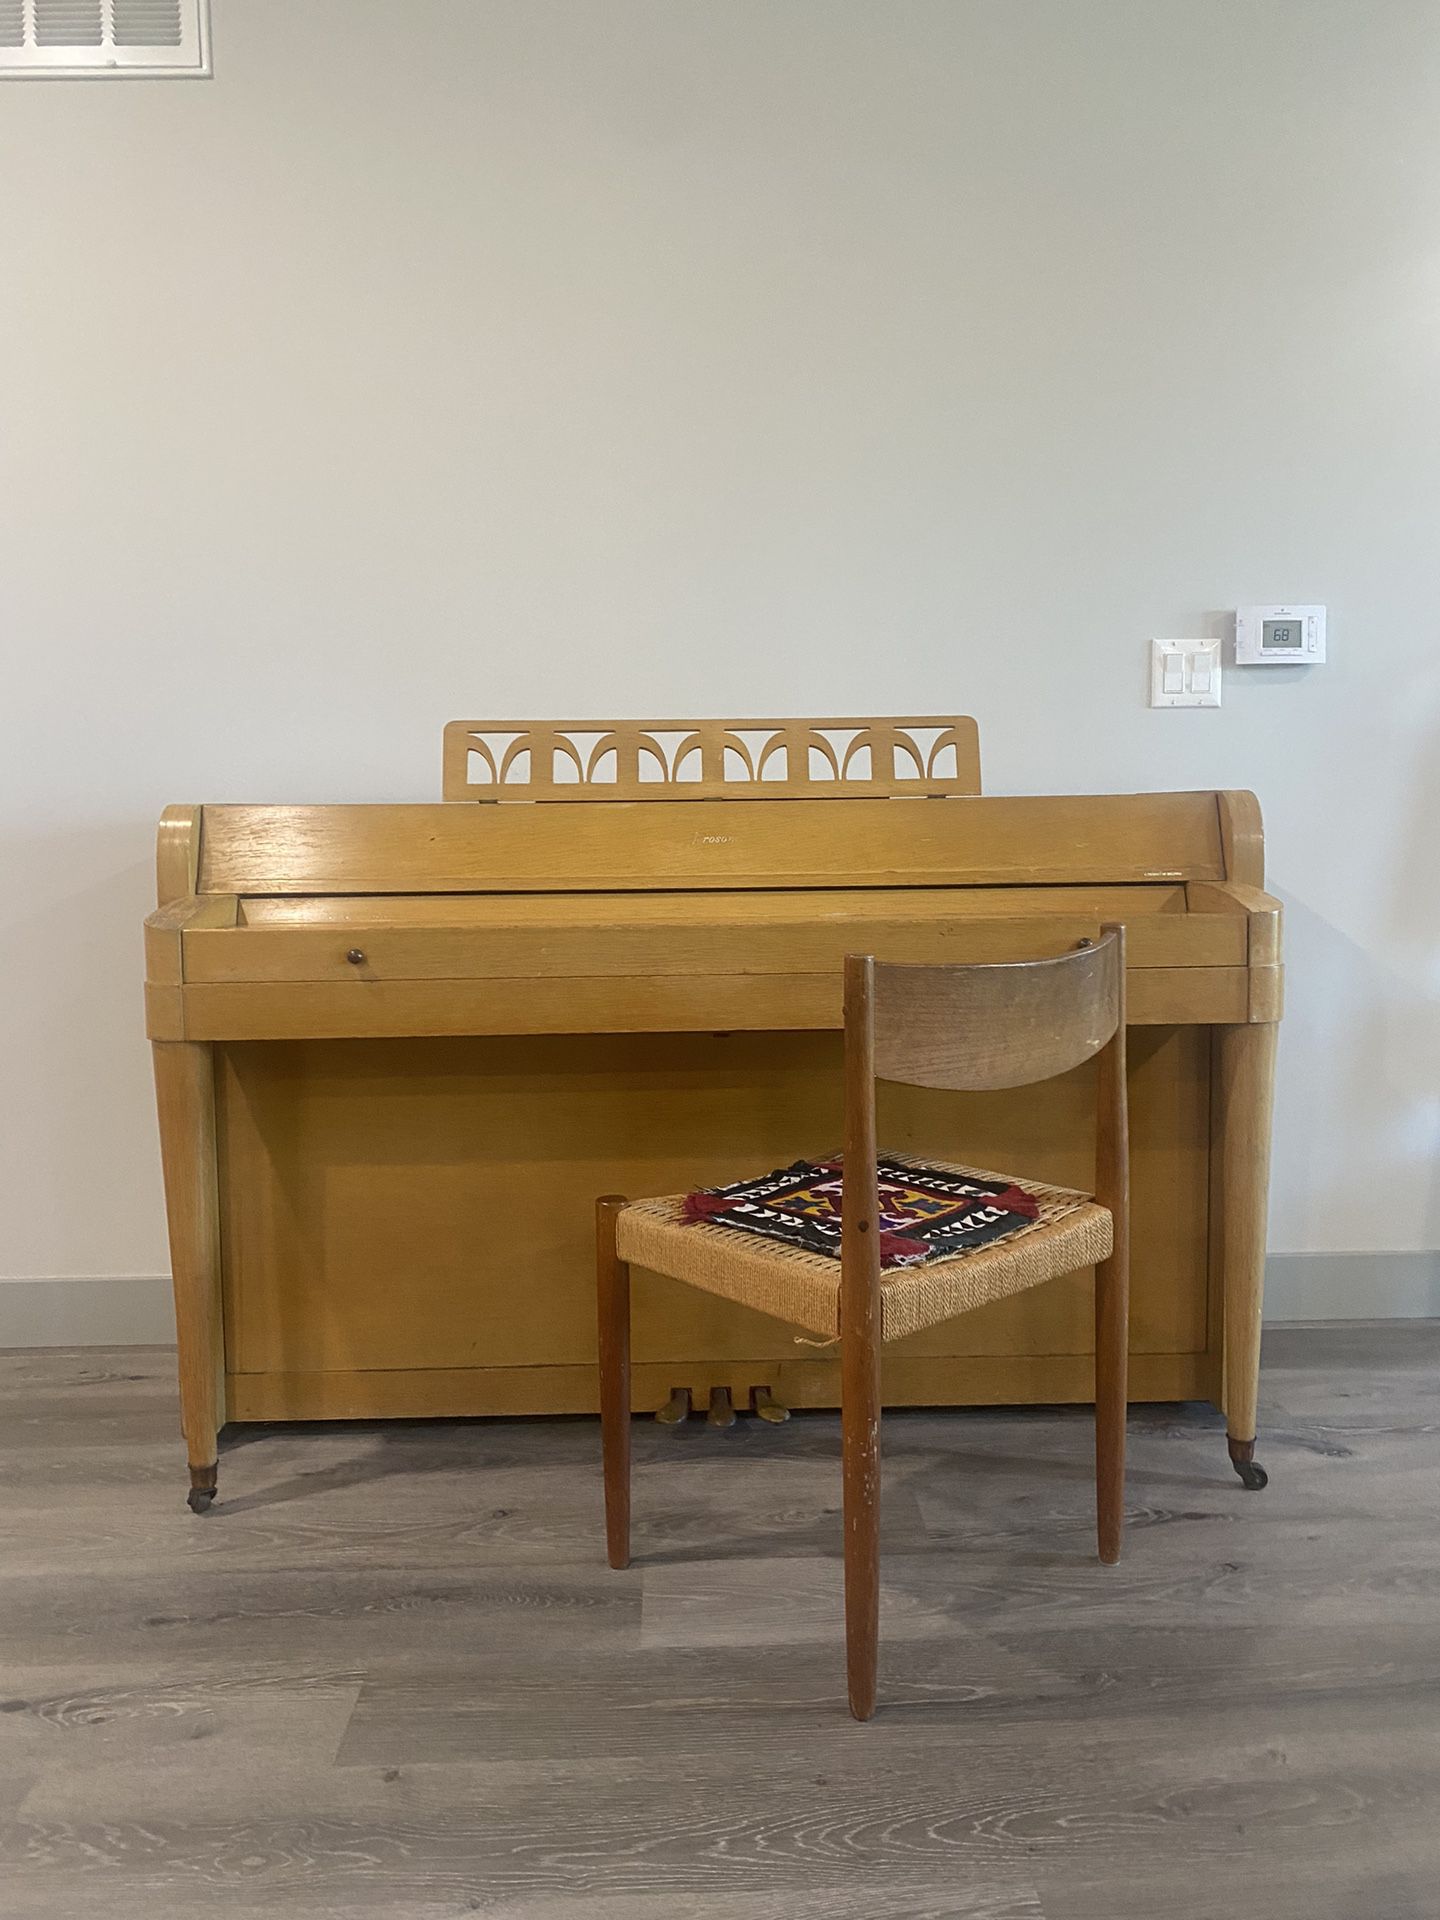 MUST GO BY SUN 5/26 Piano Baldwin upright acrosonic honey MCM mid century modern yellow brown vintage Wood  Soundproof panels